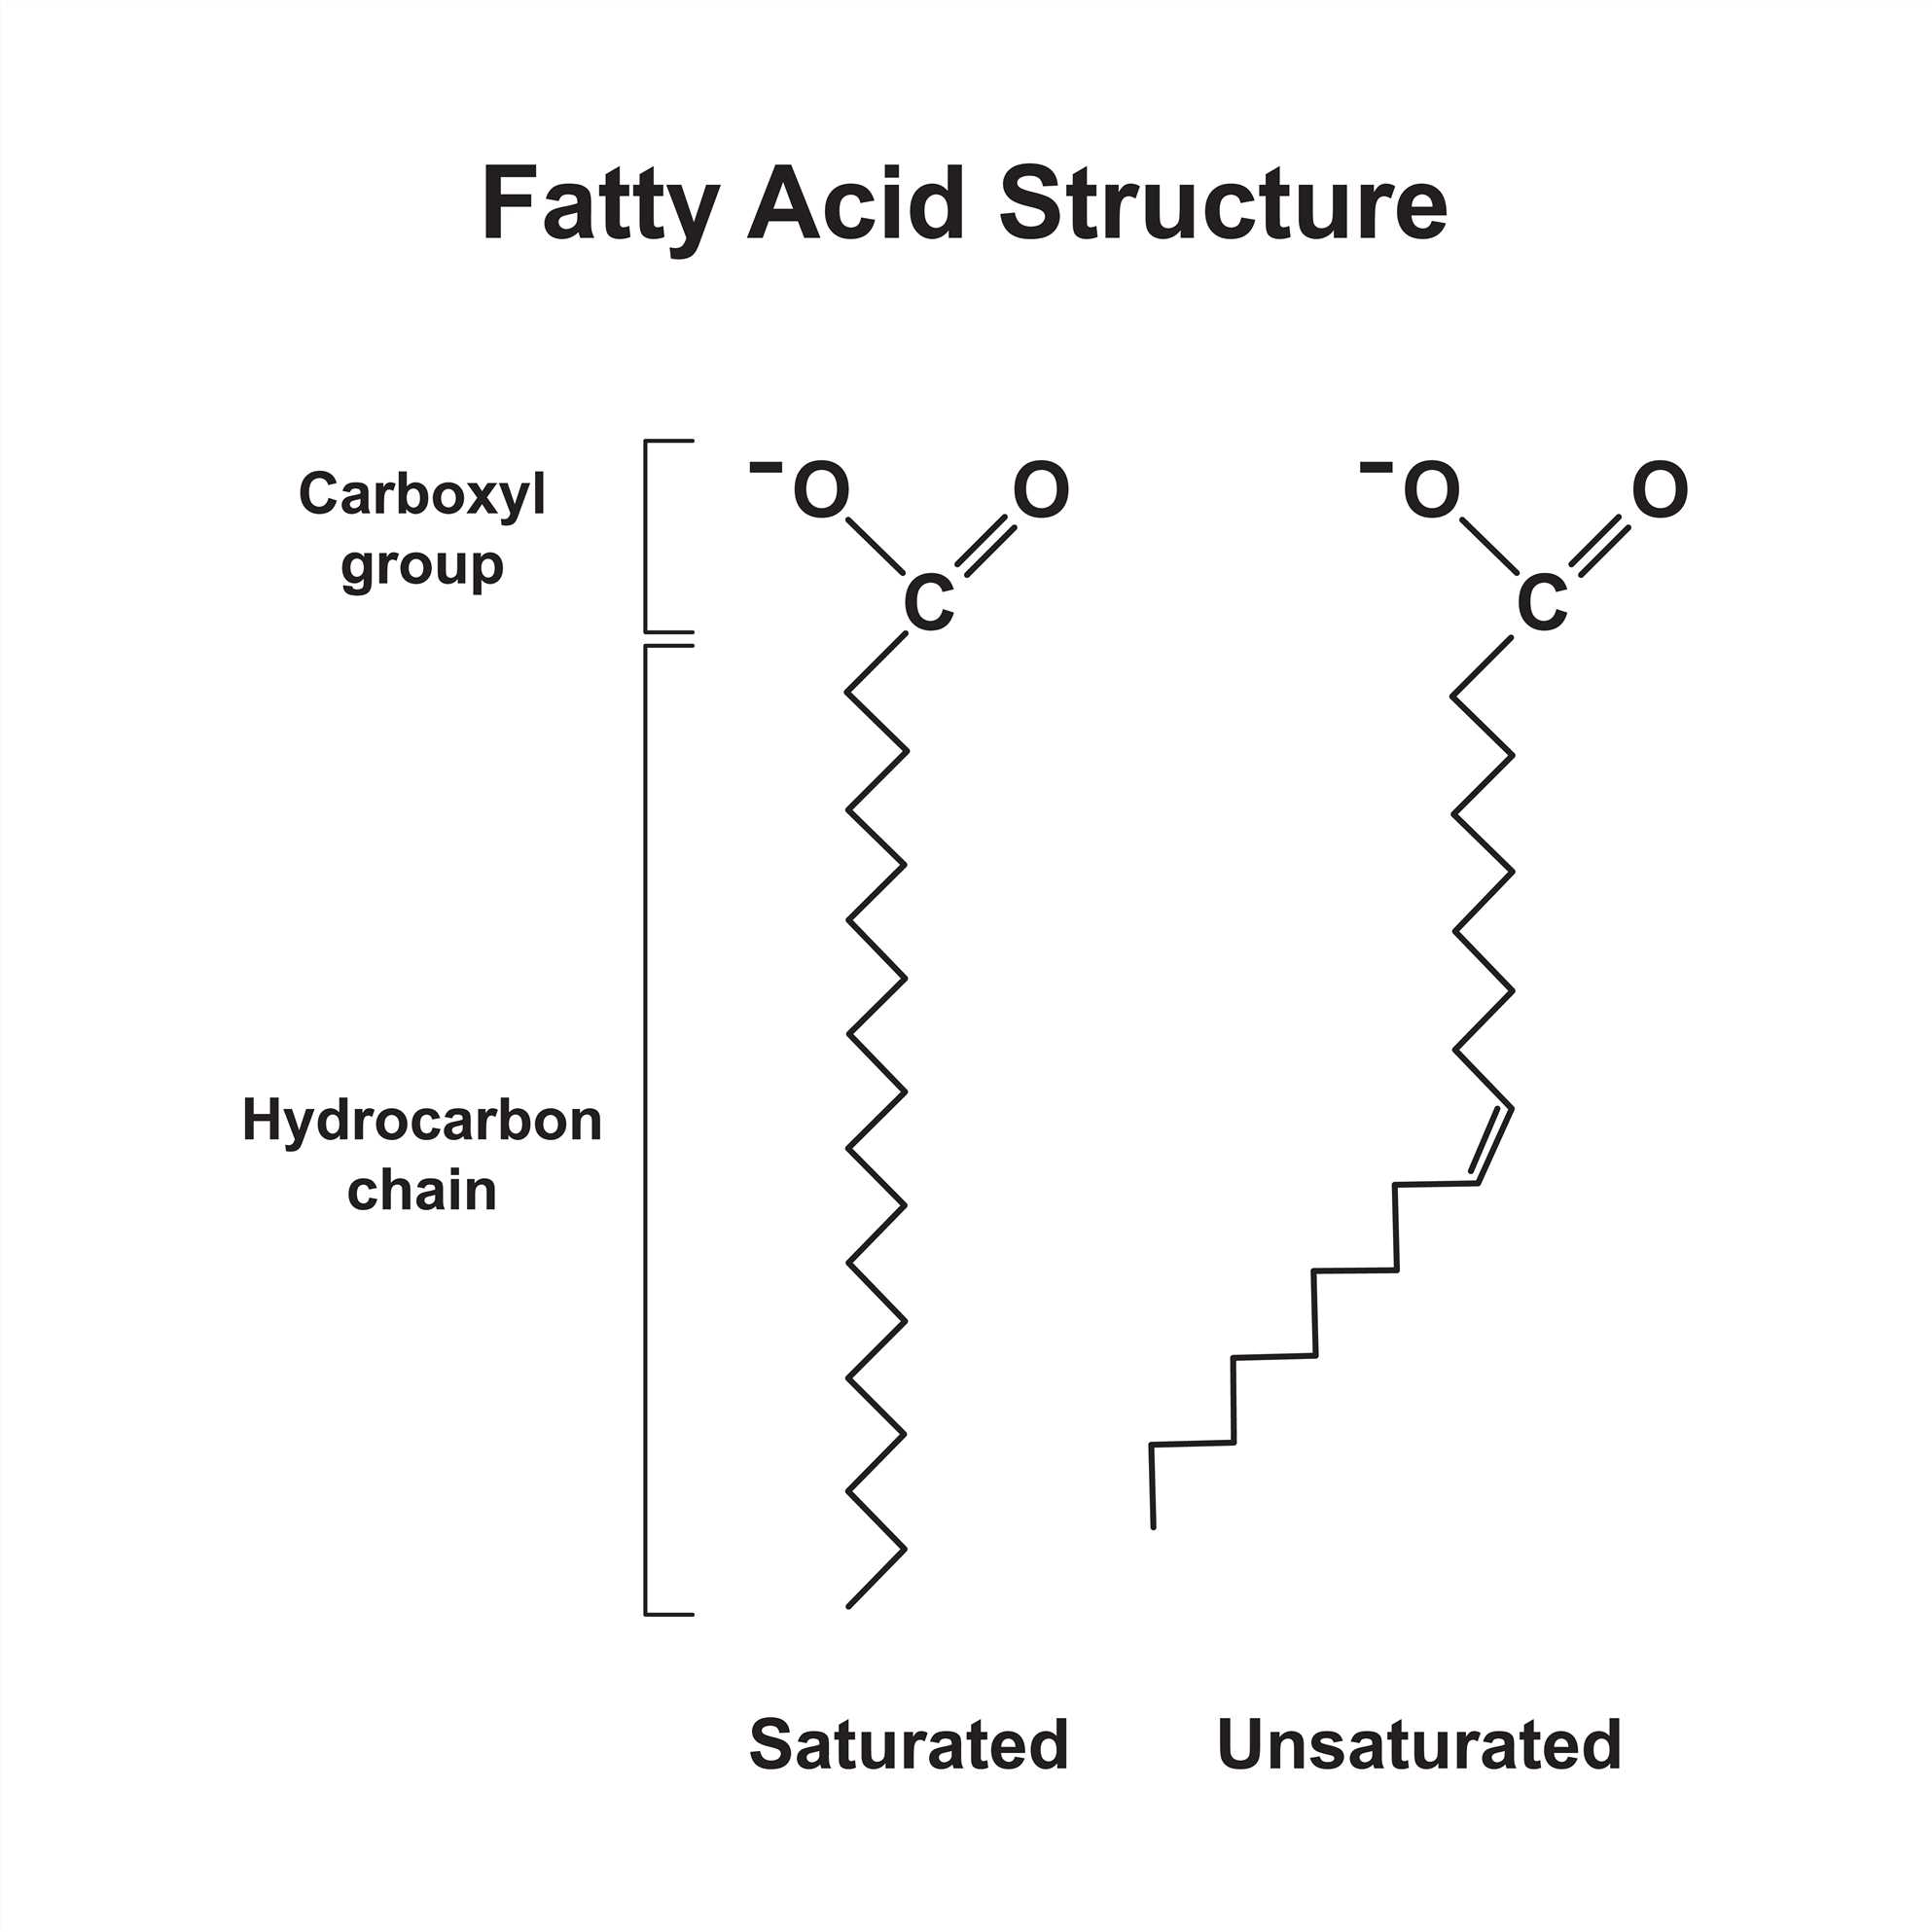 Fatty Acylation-Specific Antibody Introduction